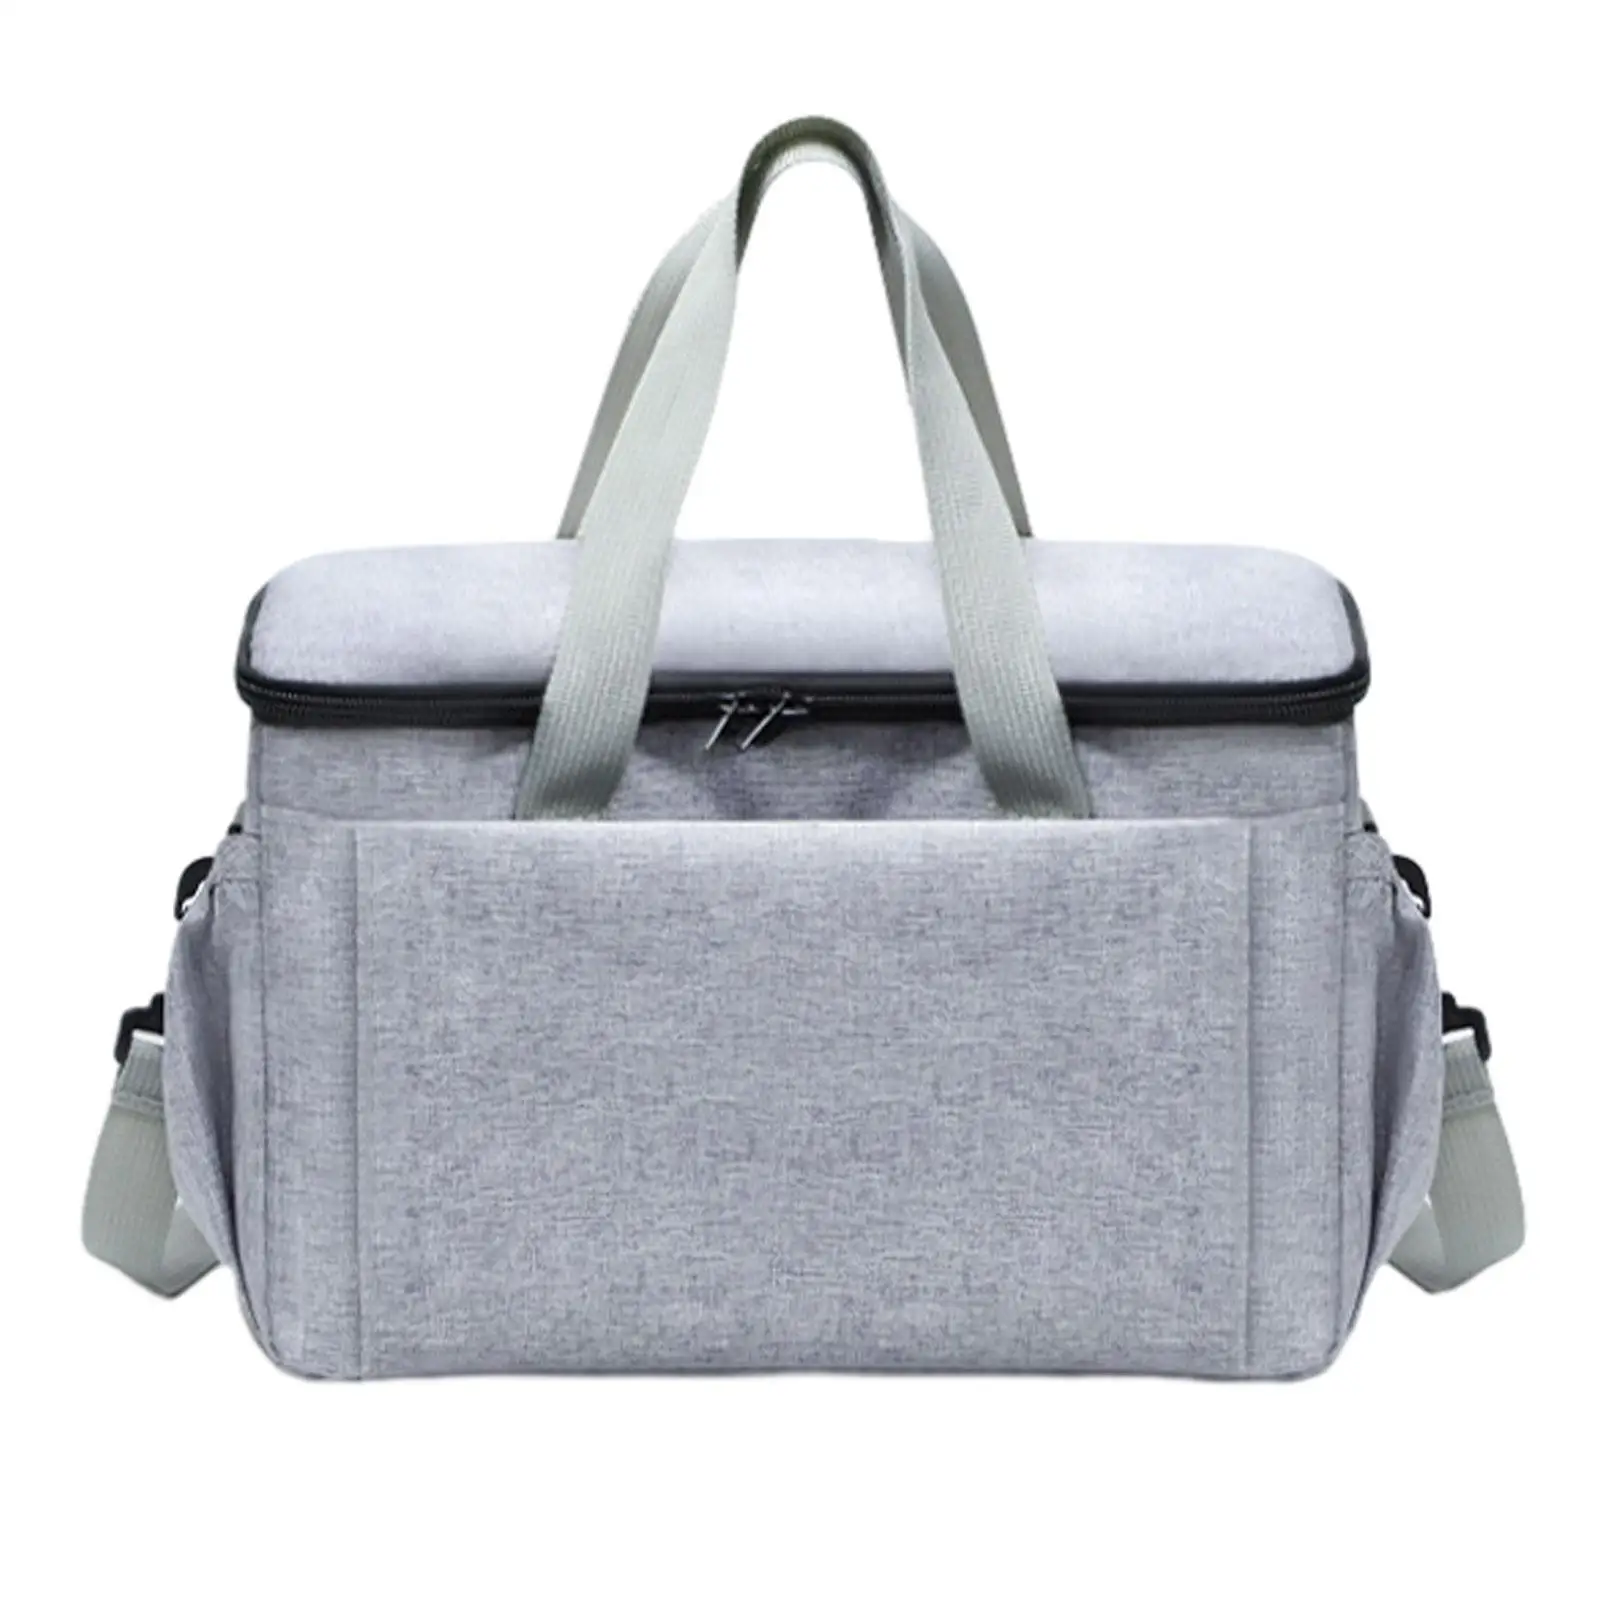 Baby Stroller Organizer Bag Portable Adjustable Shoulder Strap Baby Sundries Storage Bag for Strollers Pushchair Travel Shopping